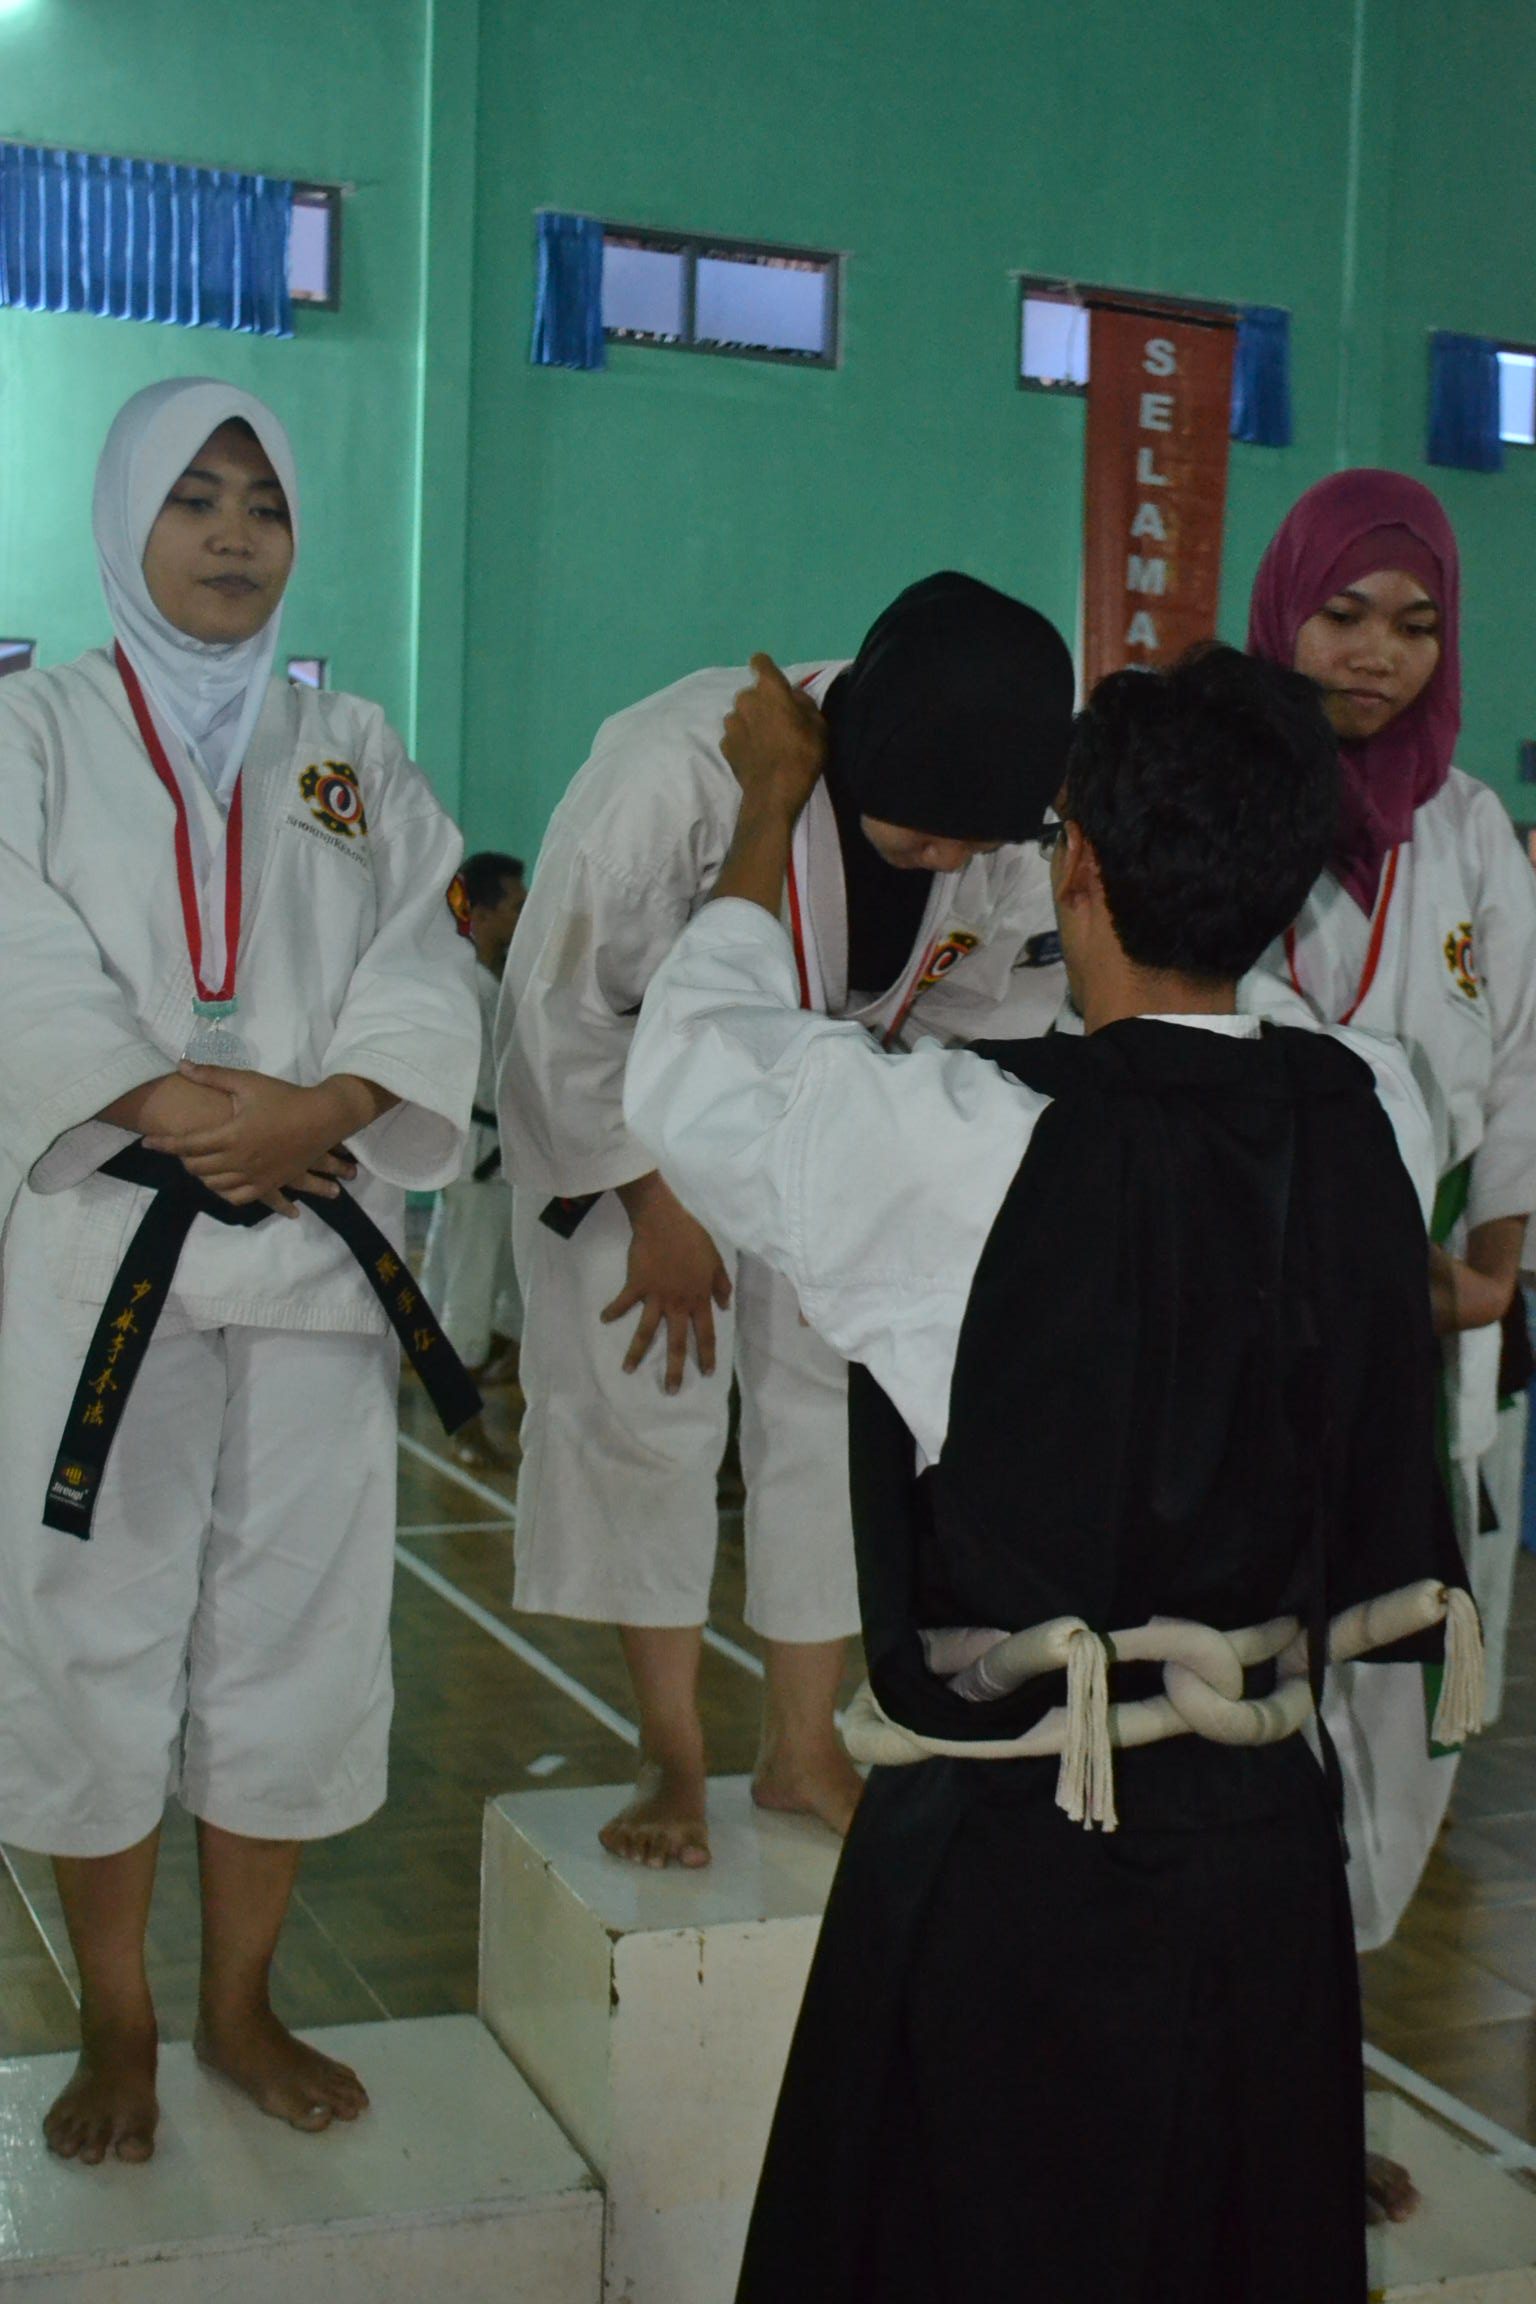 Foto Kejuaraan Daerah Tingkat Senior Cabang Olahraga Beladiri Kempo 2013 Kategori Randori Putri Kelas 51 Kg